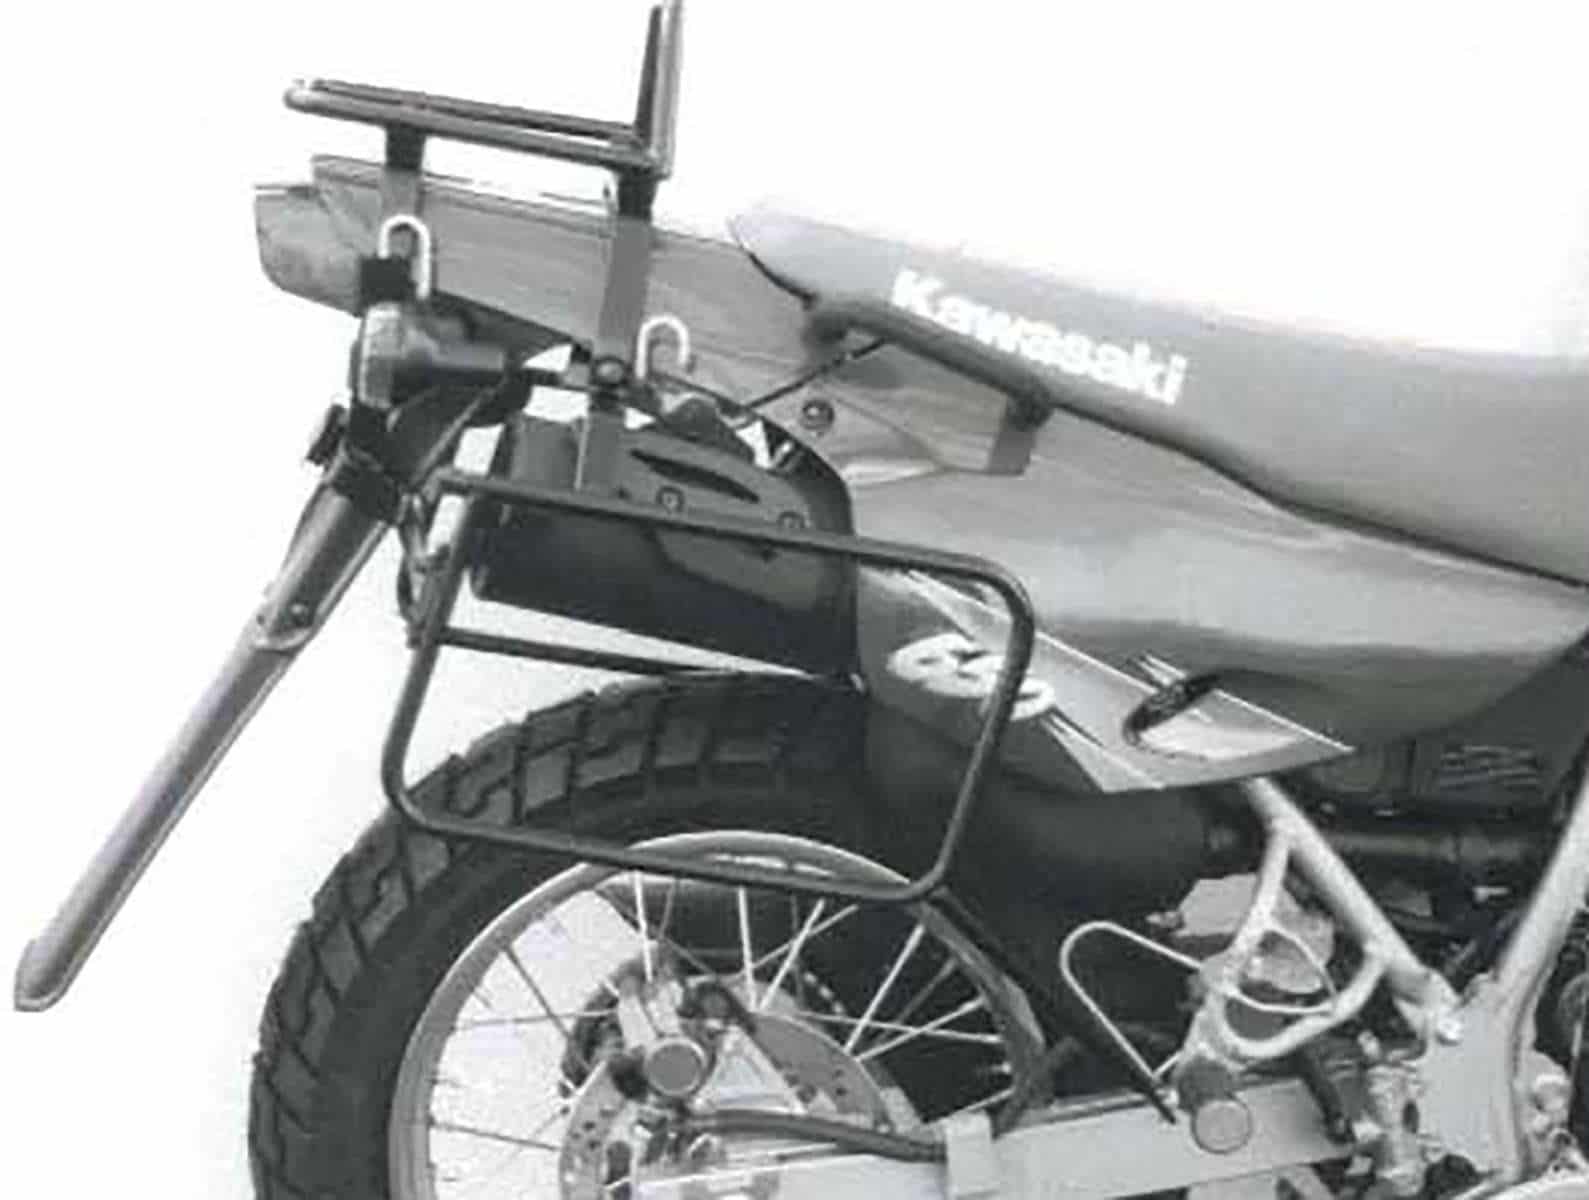 Sidecarrier permanent mounted black for Kawasaki KLR 650 (1995-2003)